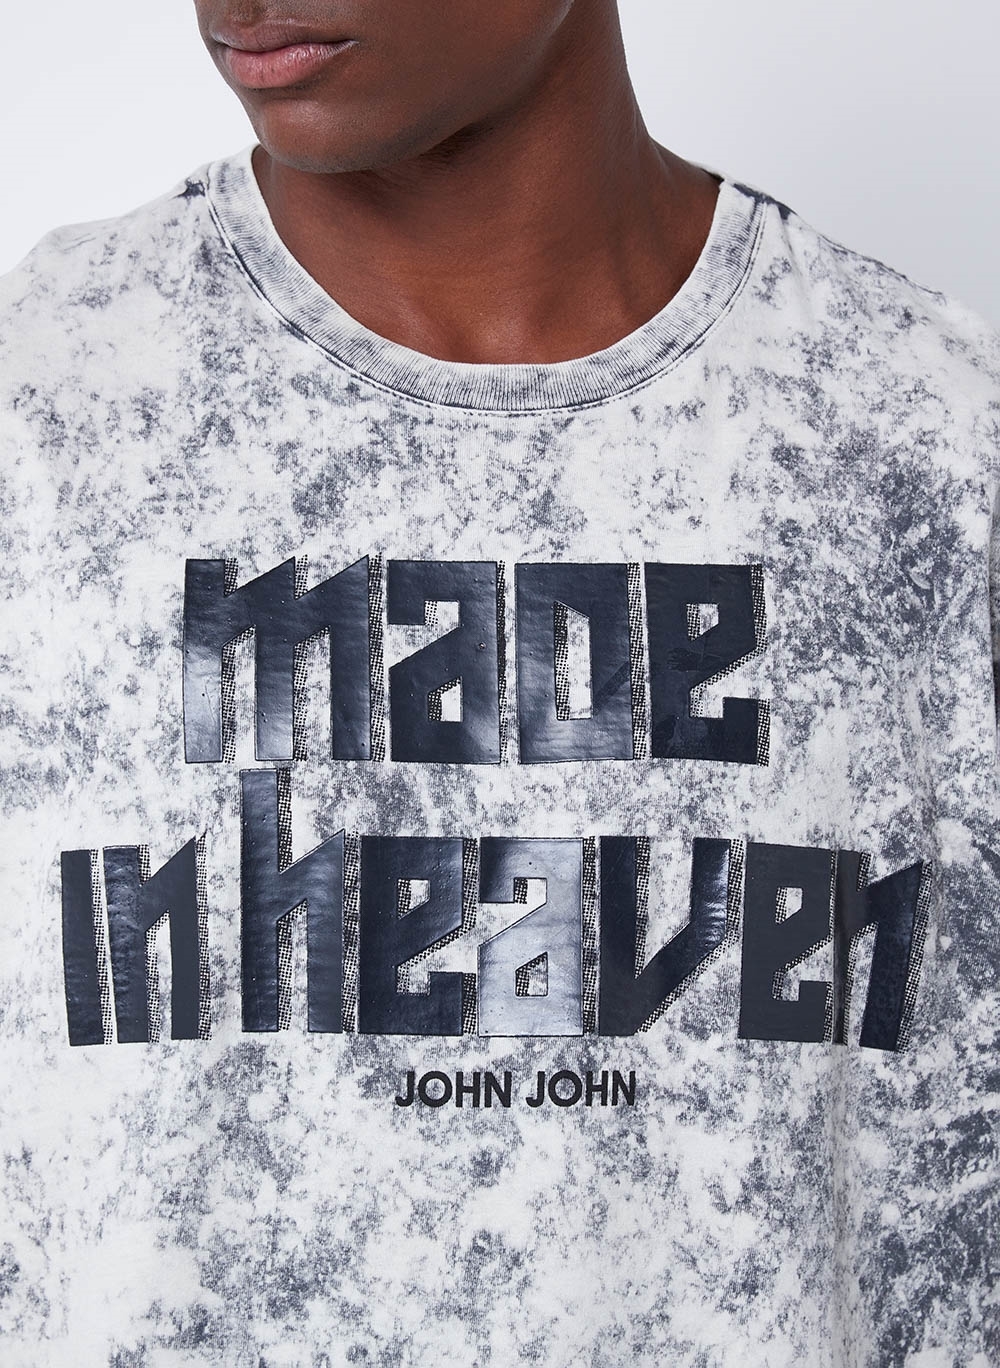 Camiseta Rg Estampa Heaven Statue John John